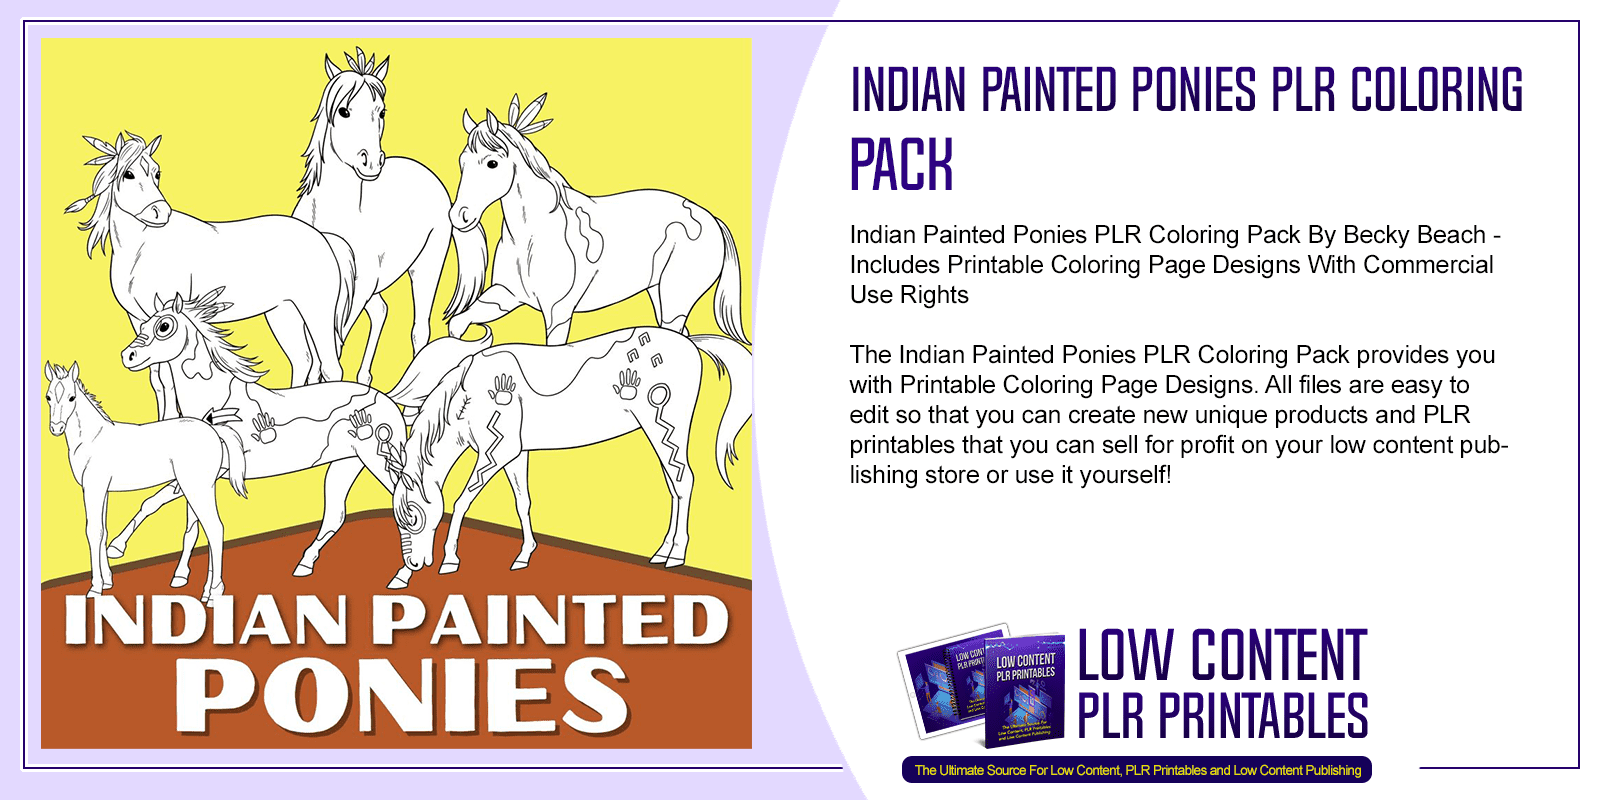 Indian Painted Ponies PLR Coloring Pack